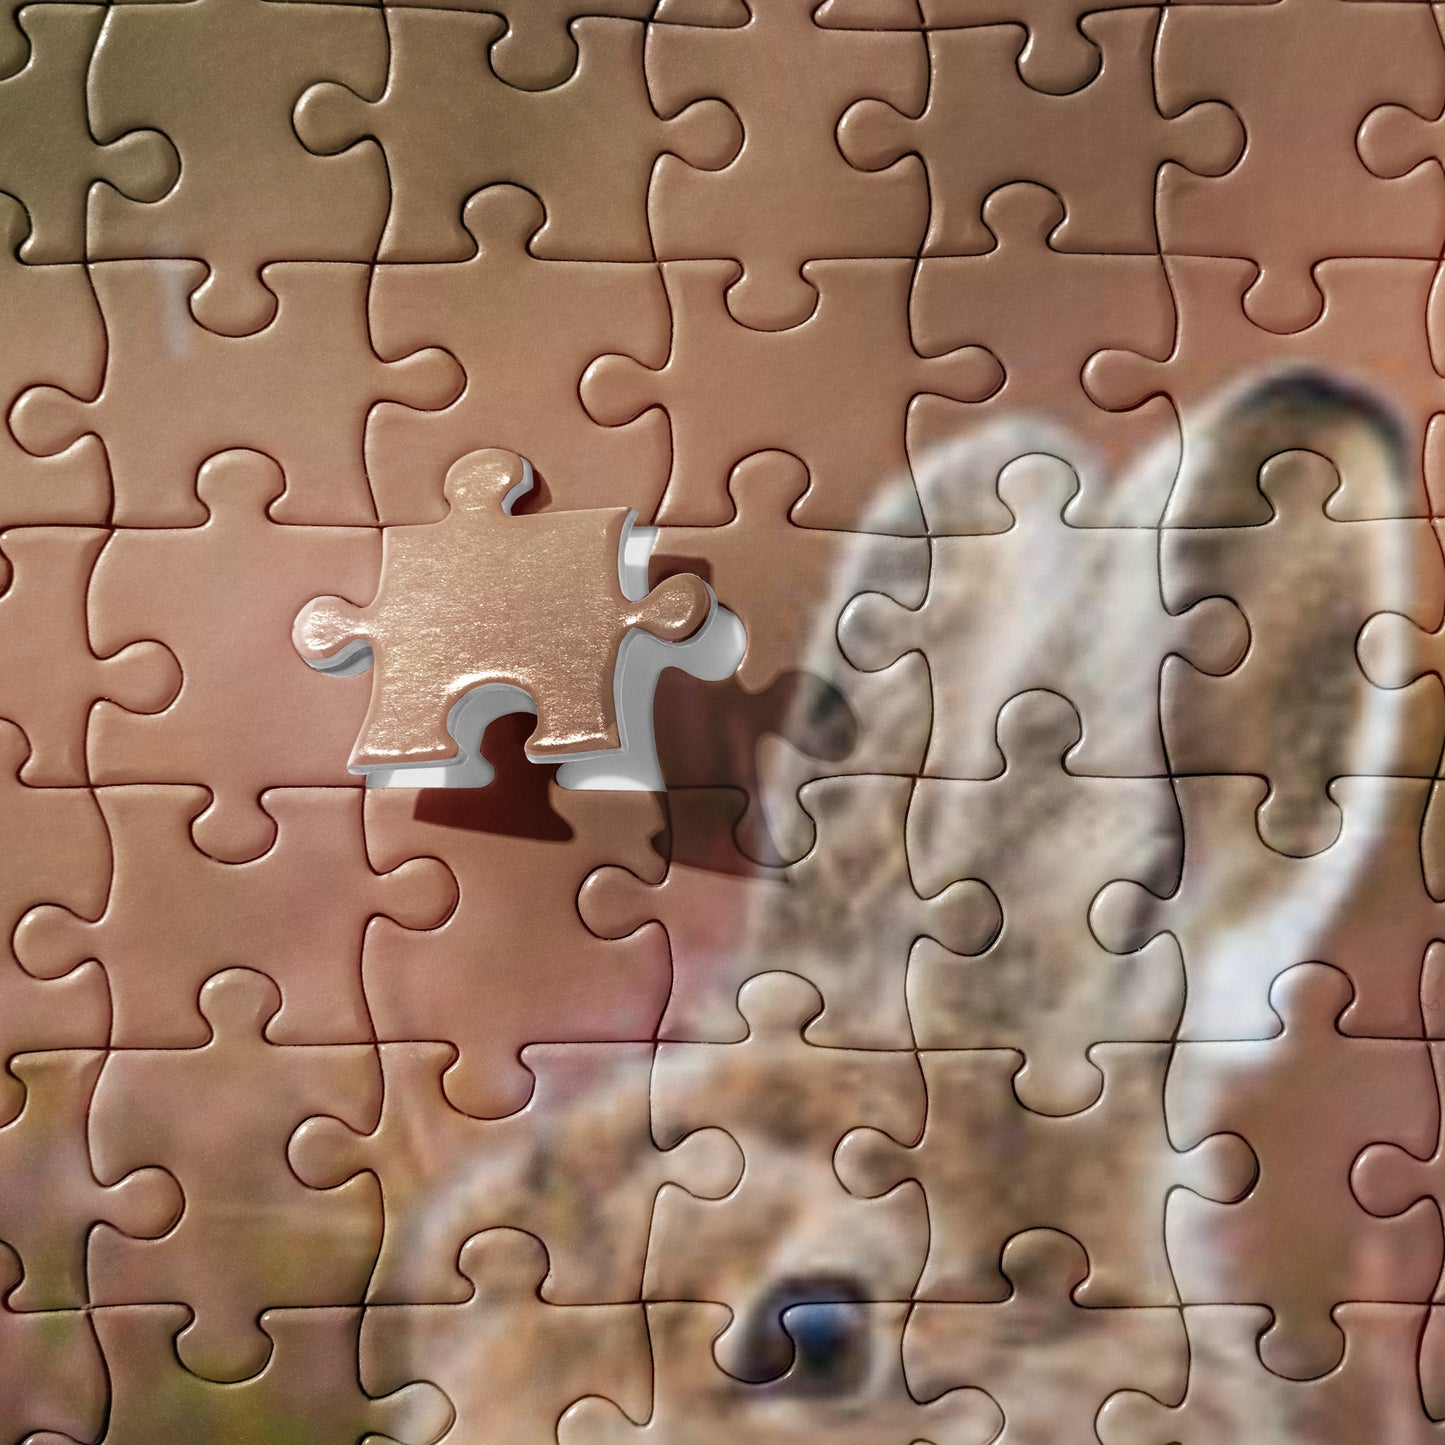 "Camouflage" Jigsaw puzzle